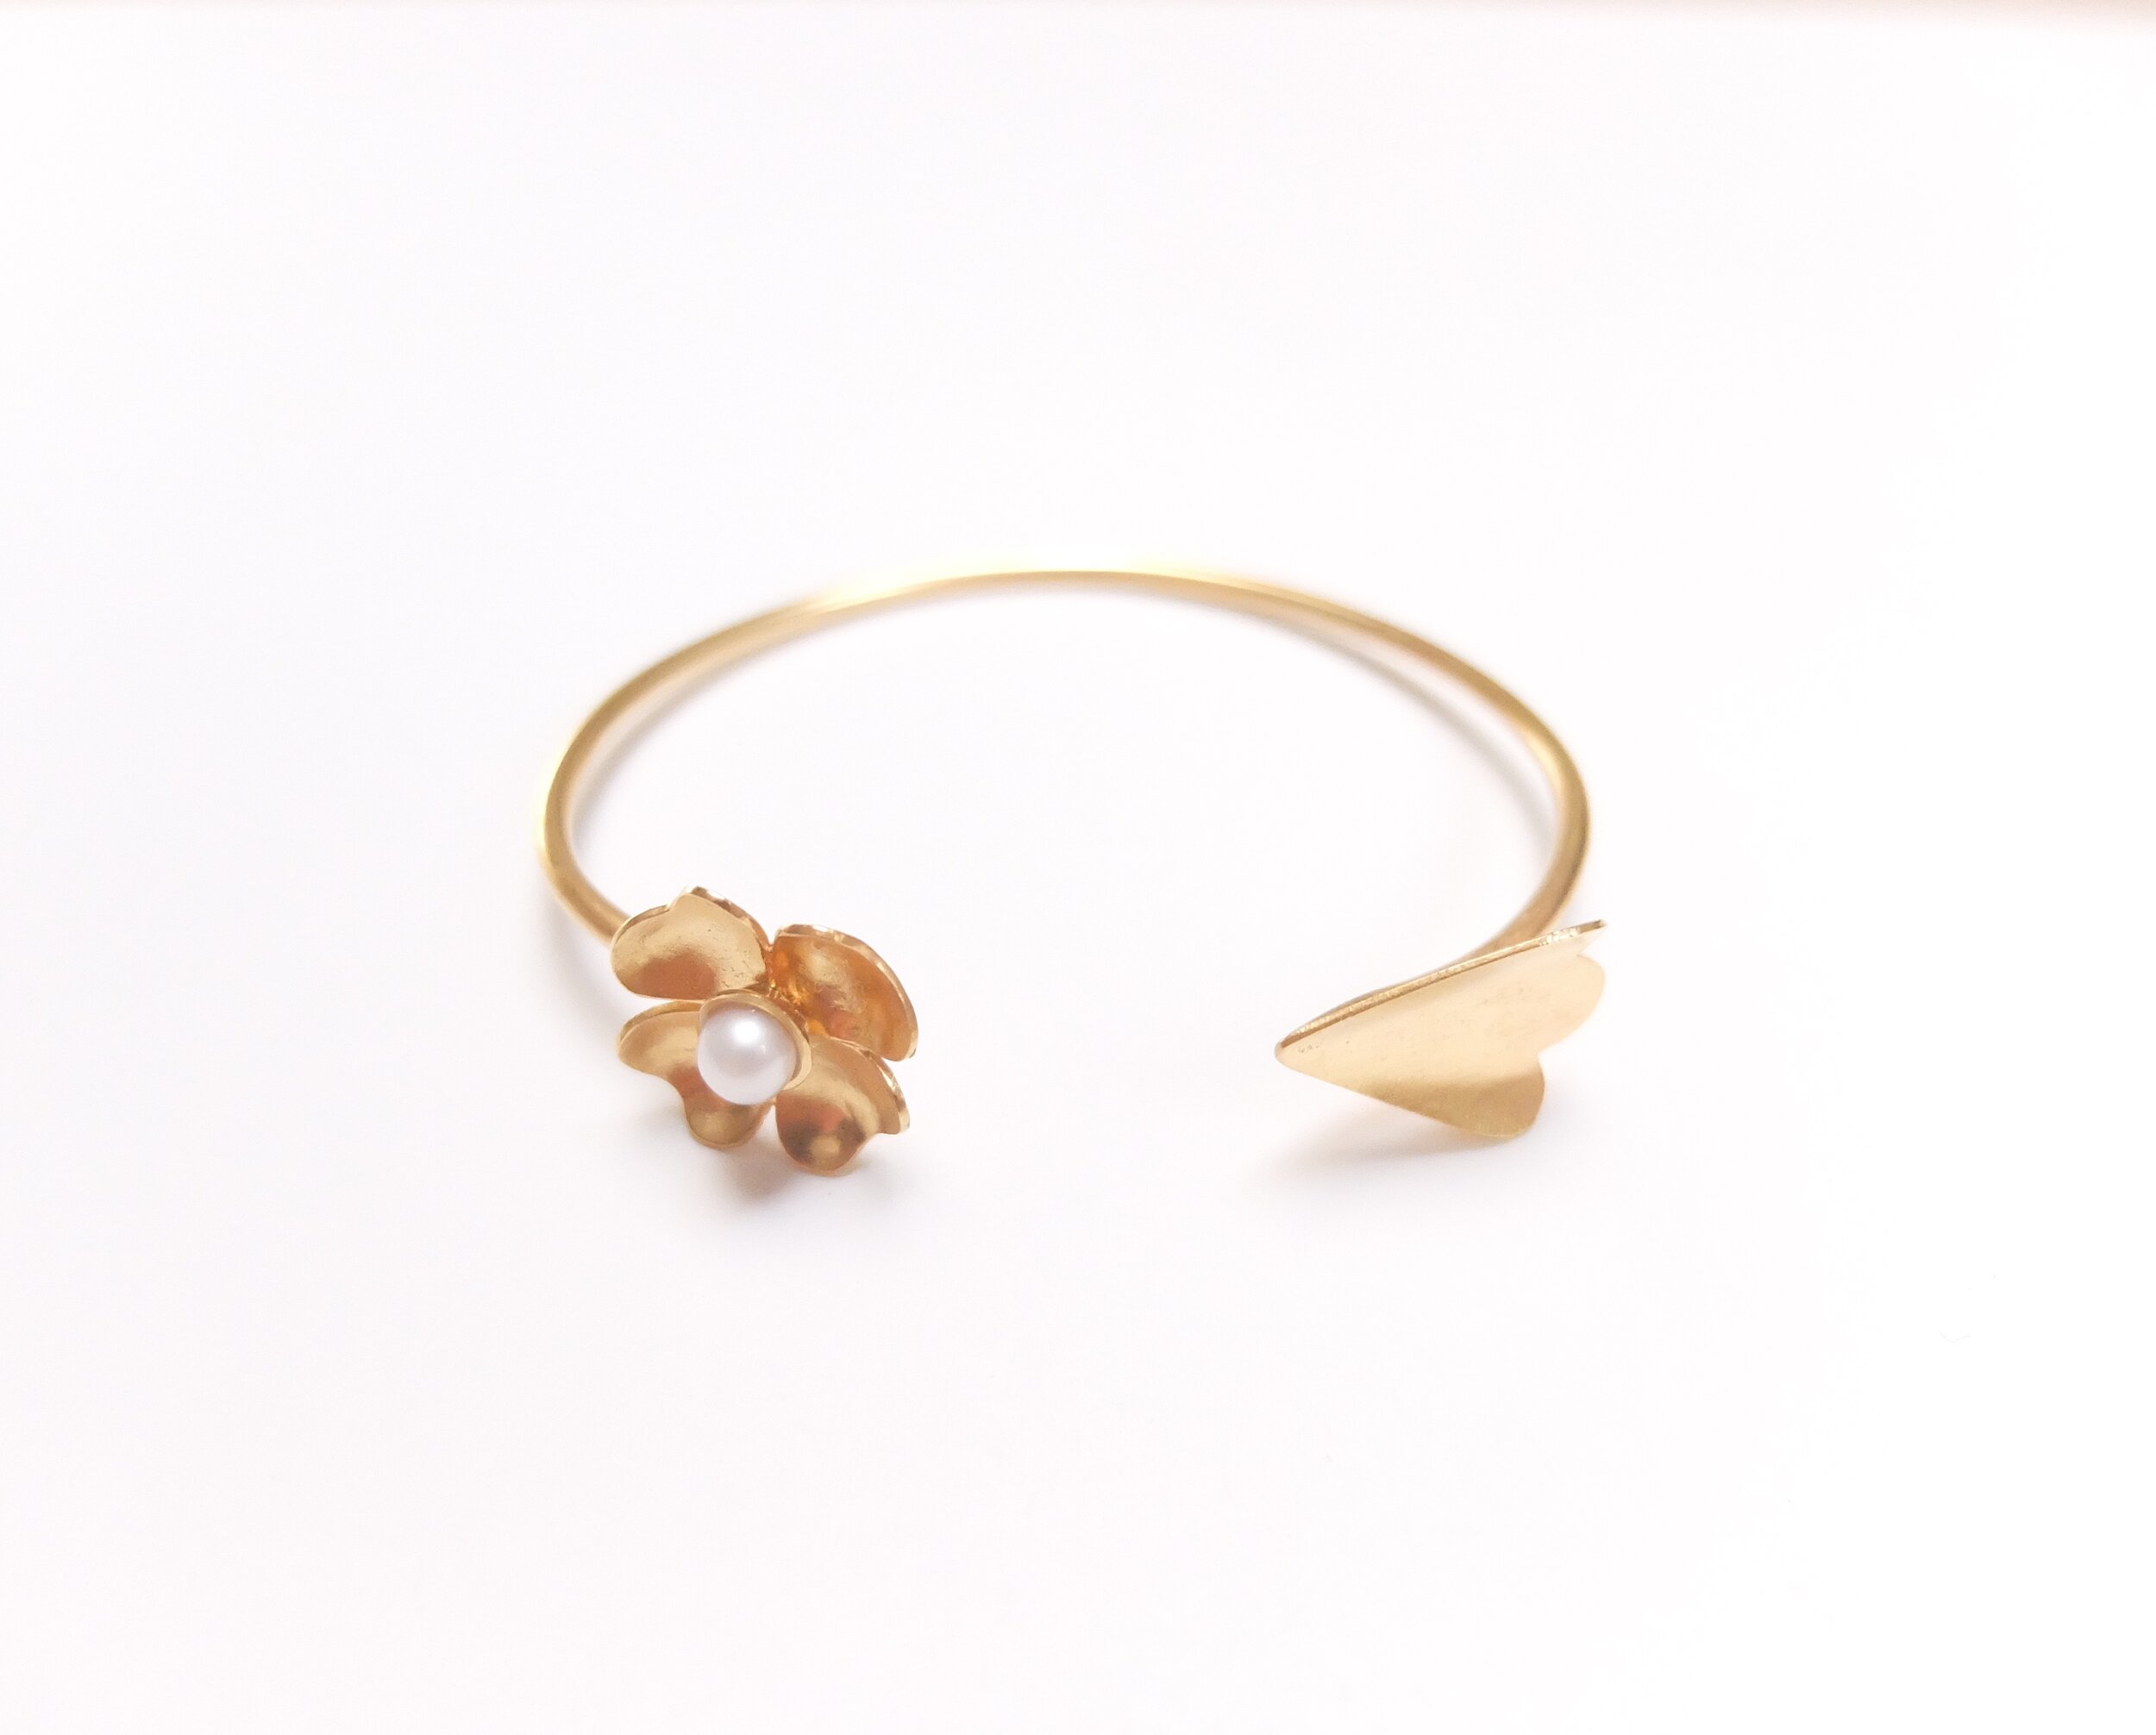 Rita_Carrega_Joalharia_Jewelry_Pulseira_Dourada_Pérola_Bracelet_Gold_Plated_Silver_Pearl_3a.jpg